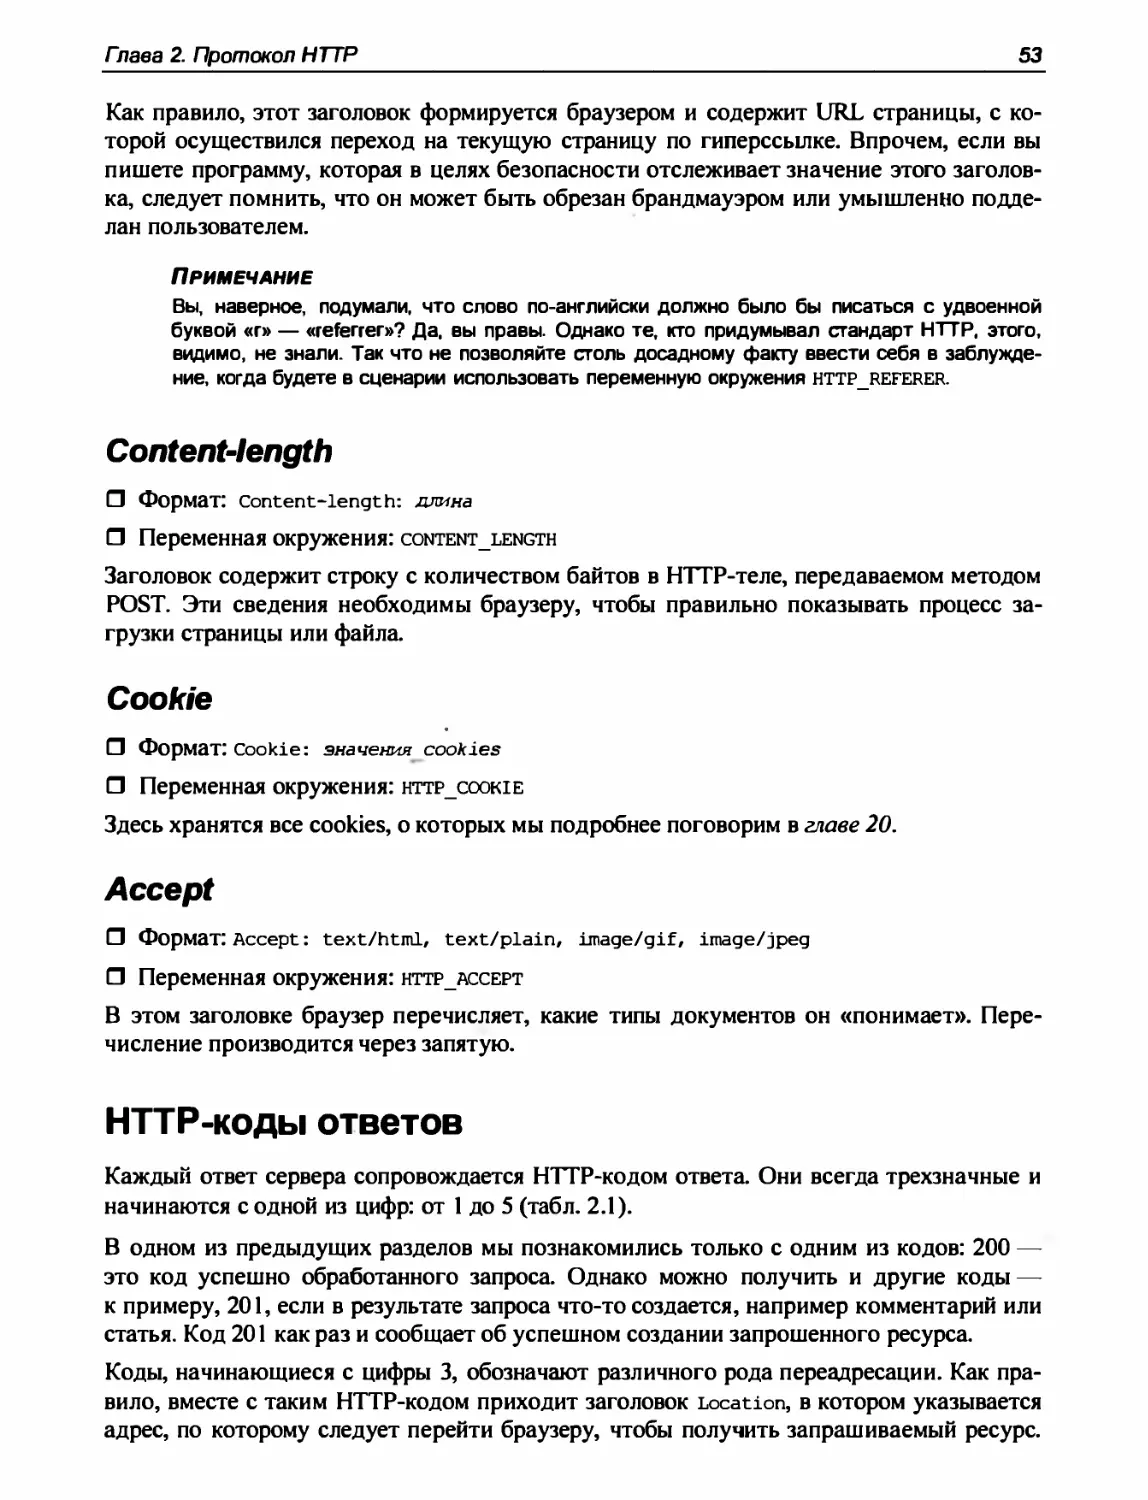 Content-length
Cookie
Accept
HTTP-коды ответов